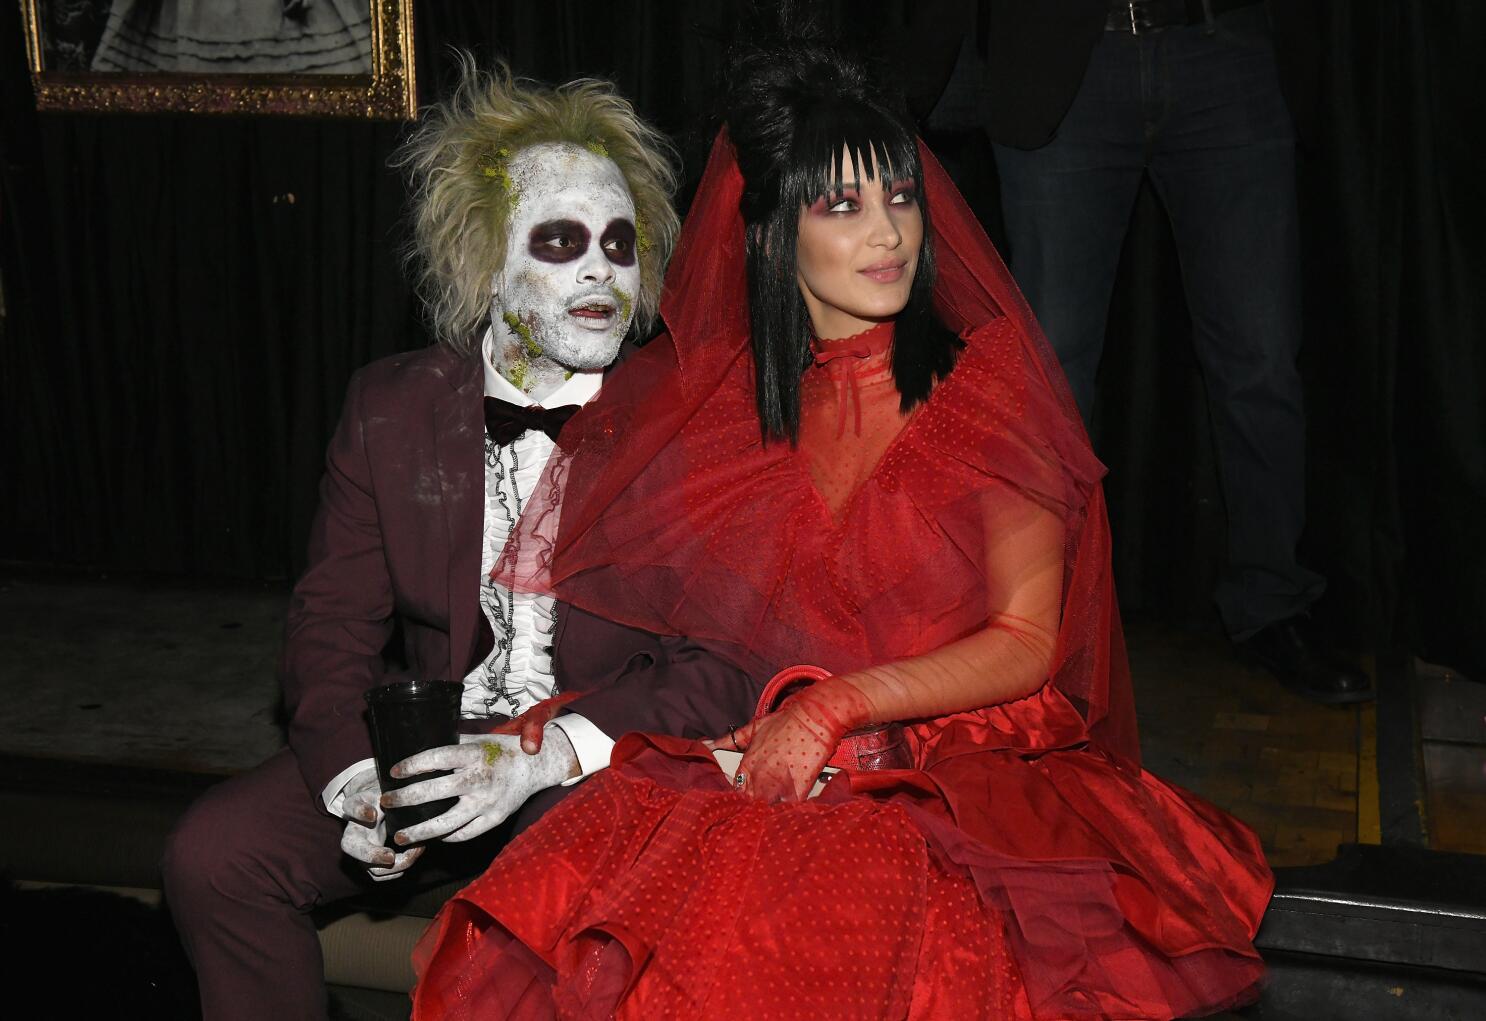 Heidi Klum's Halloween Costume Is an Homage to Michael Jackson